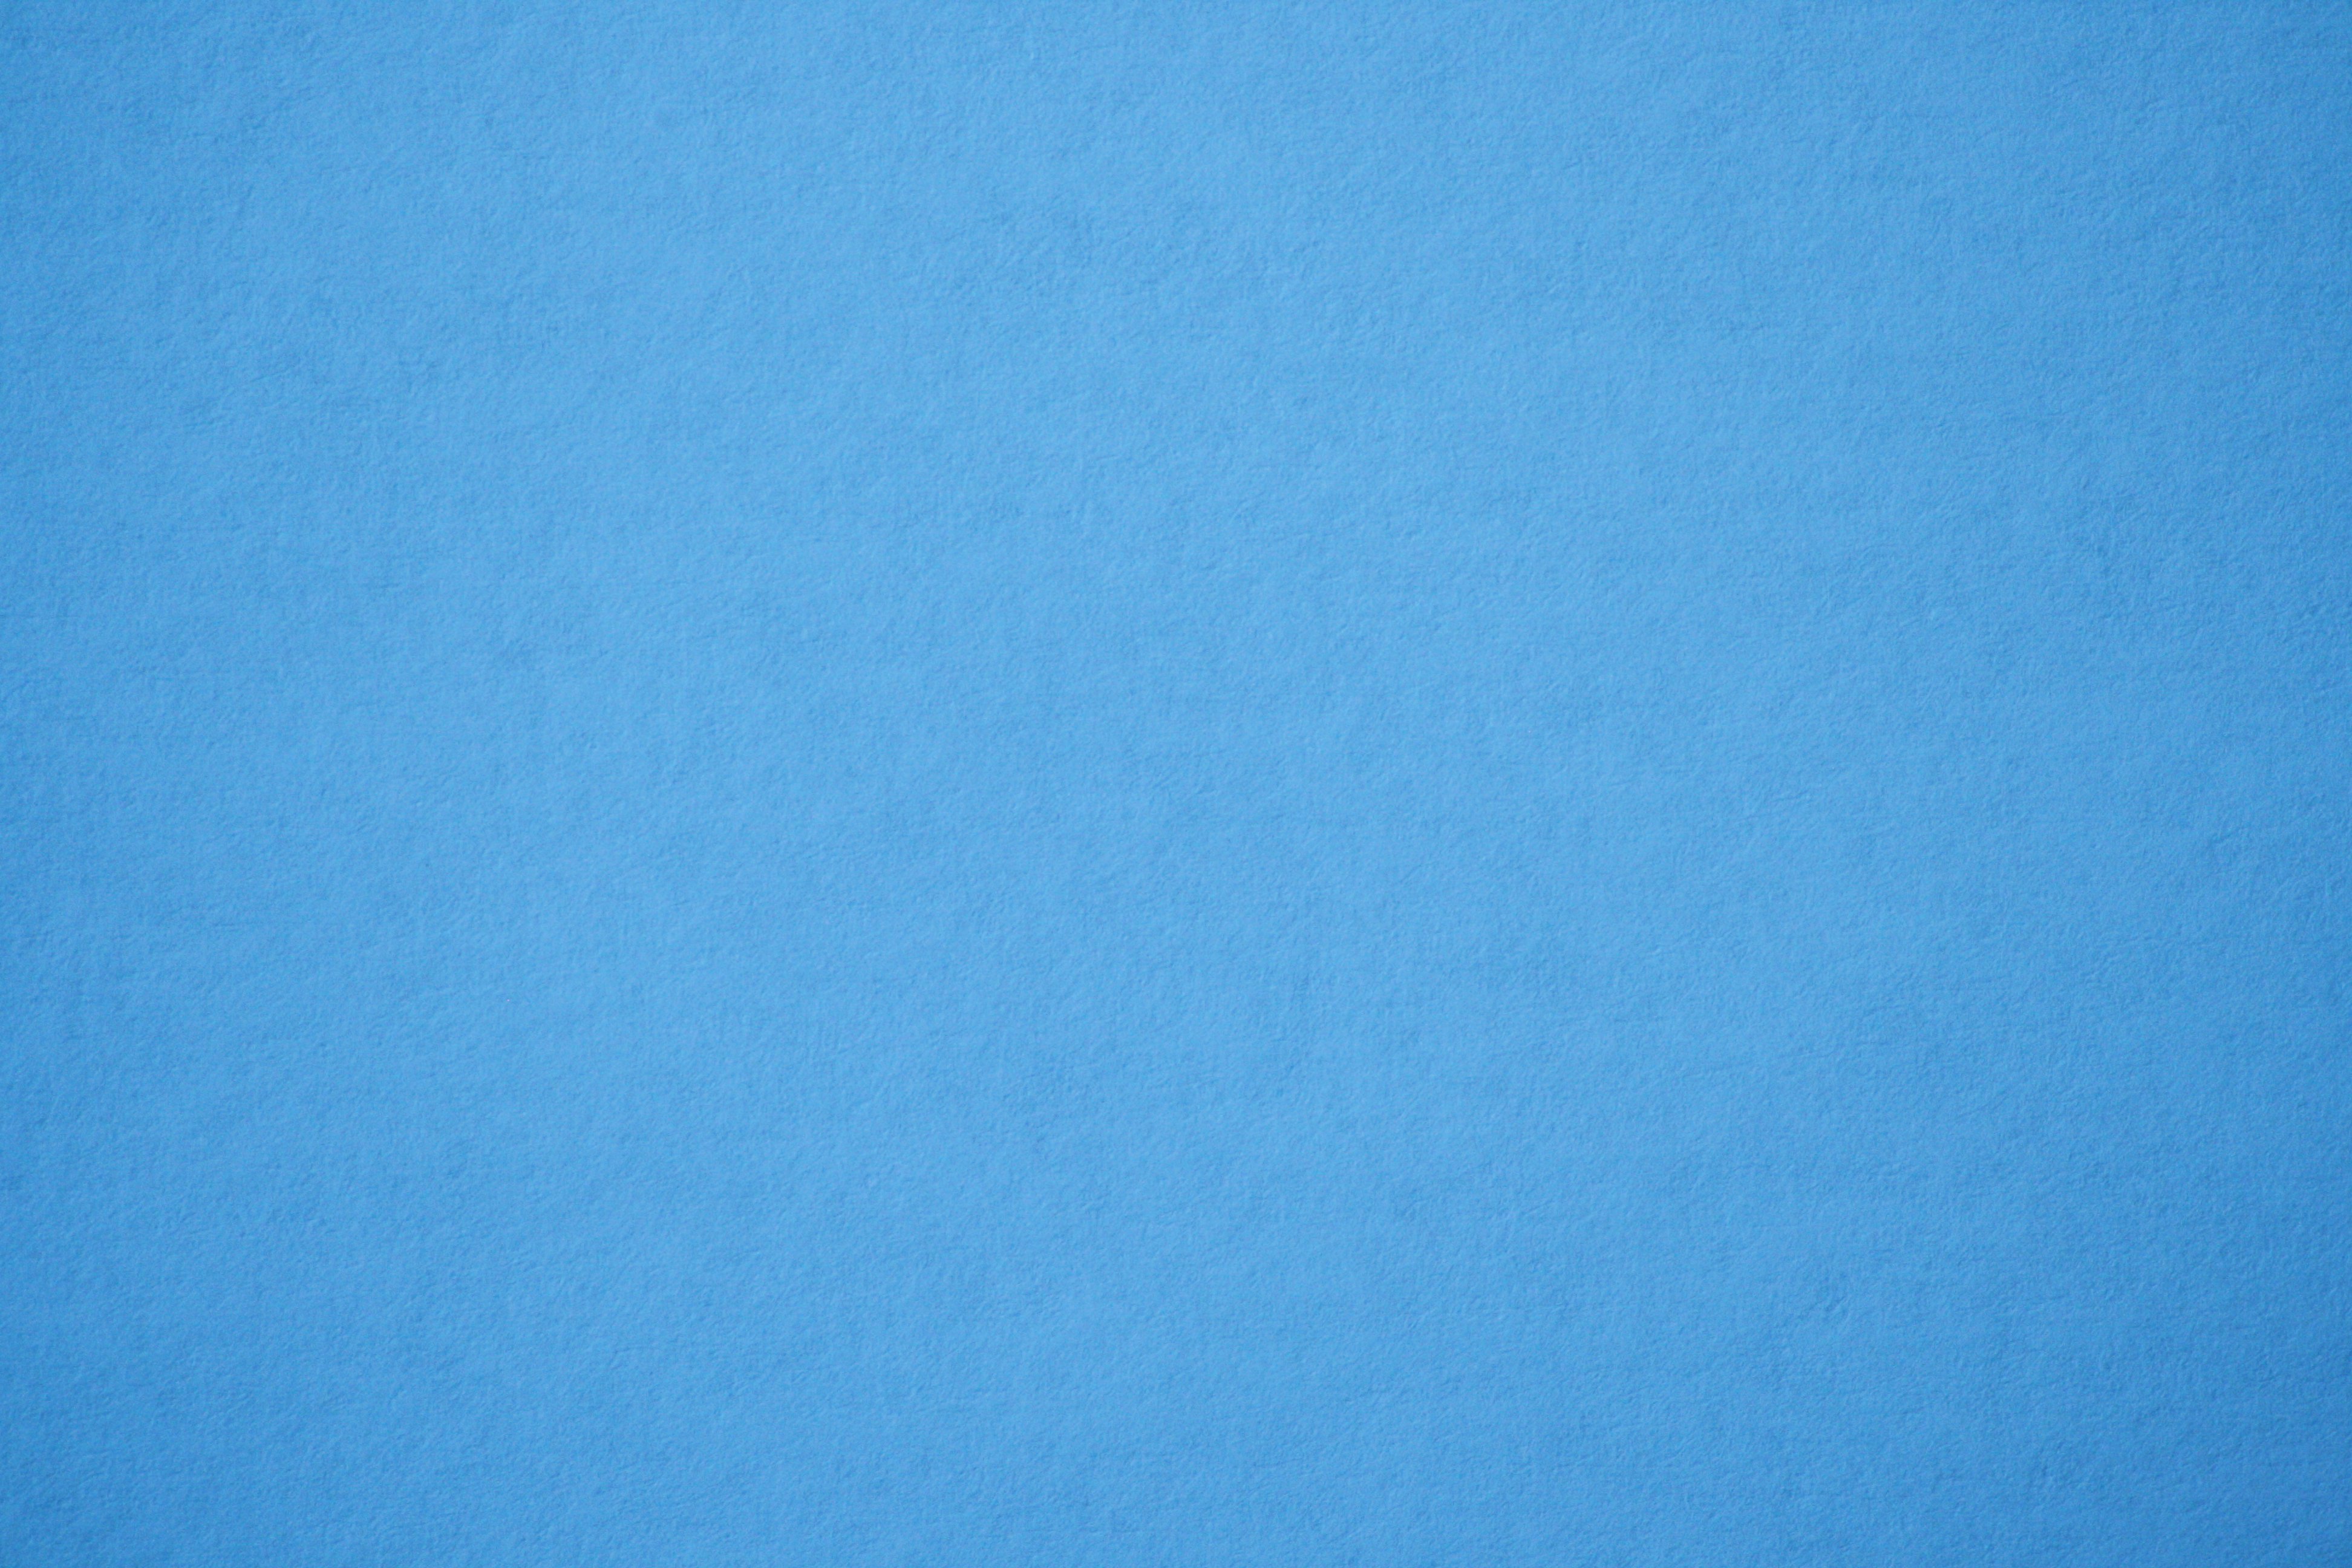 Blue Paper Texture Picture, Free Photograph